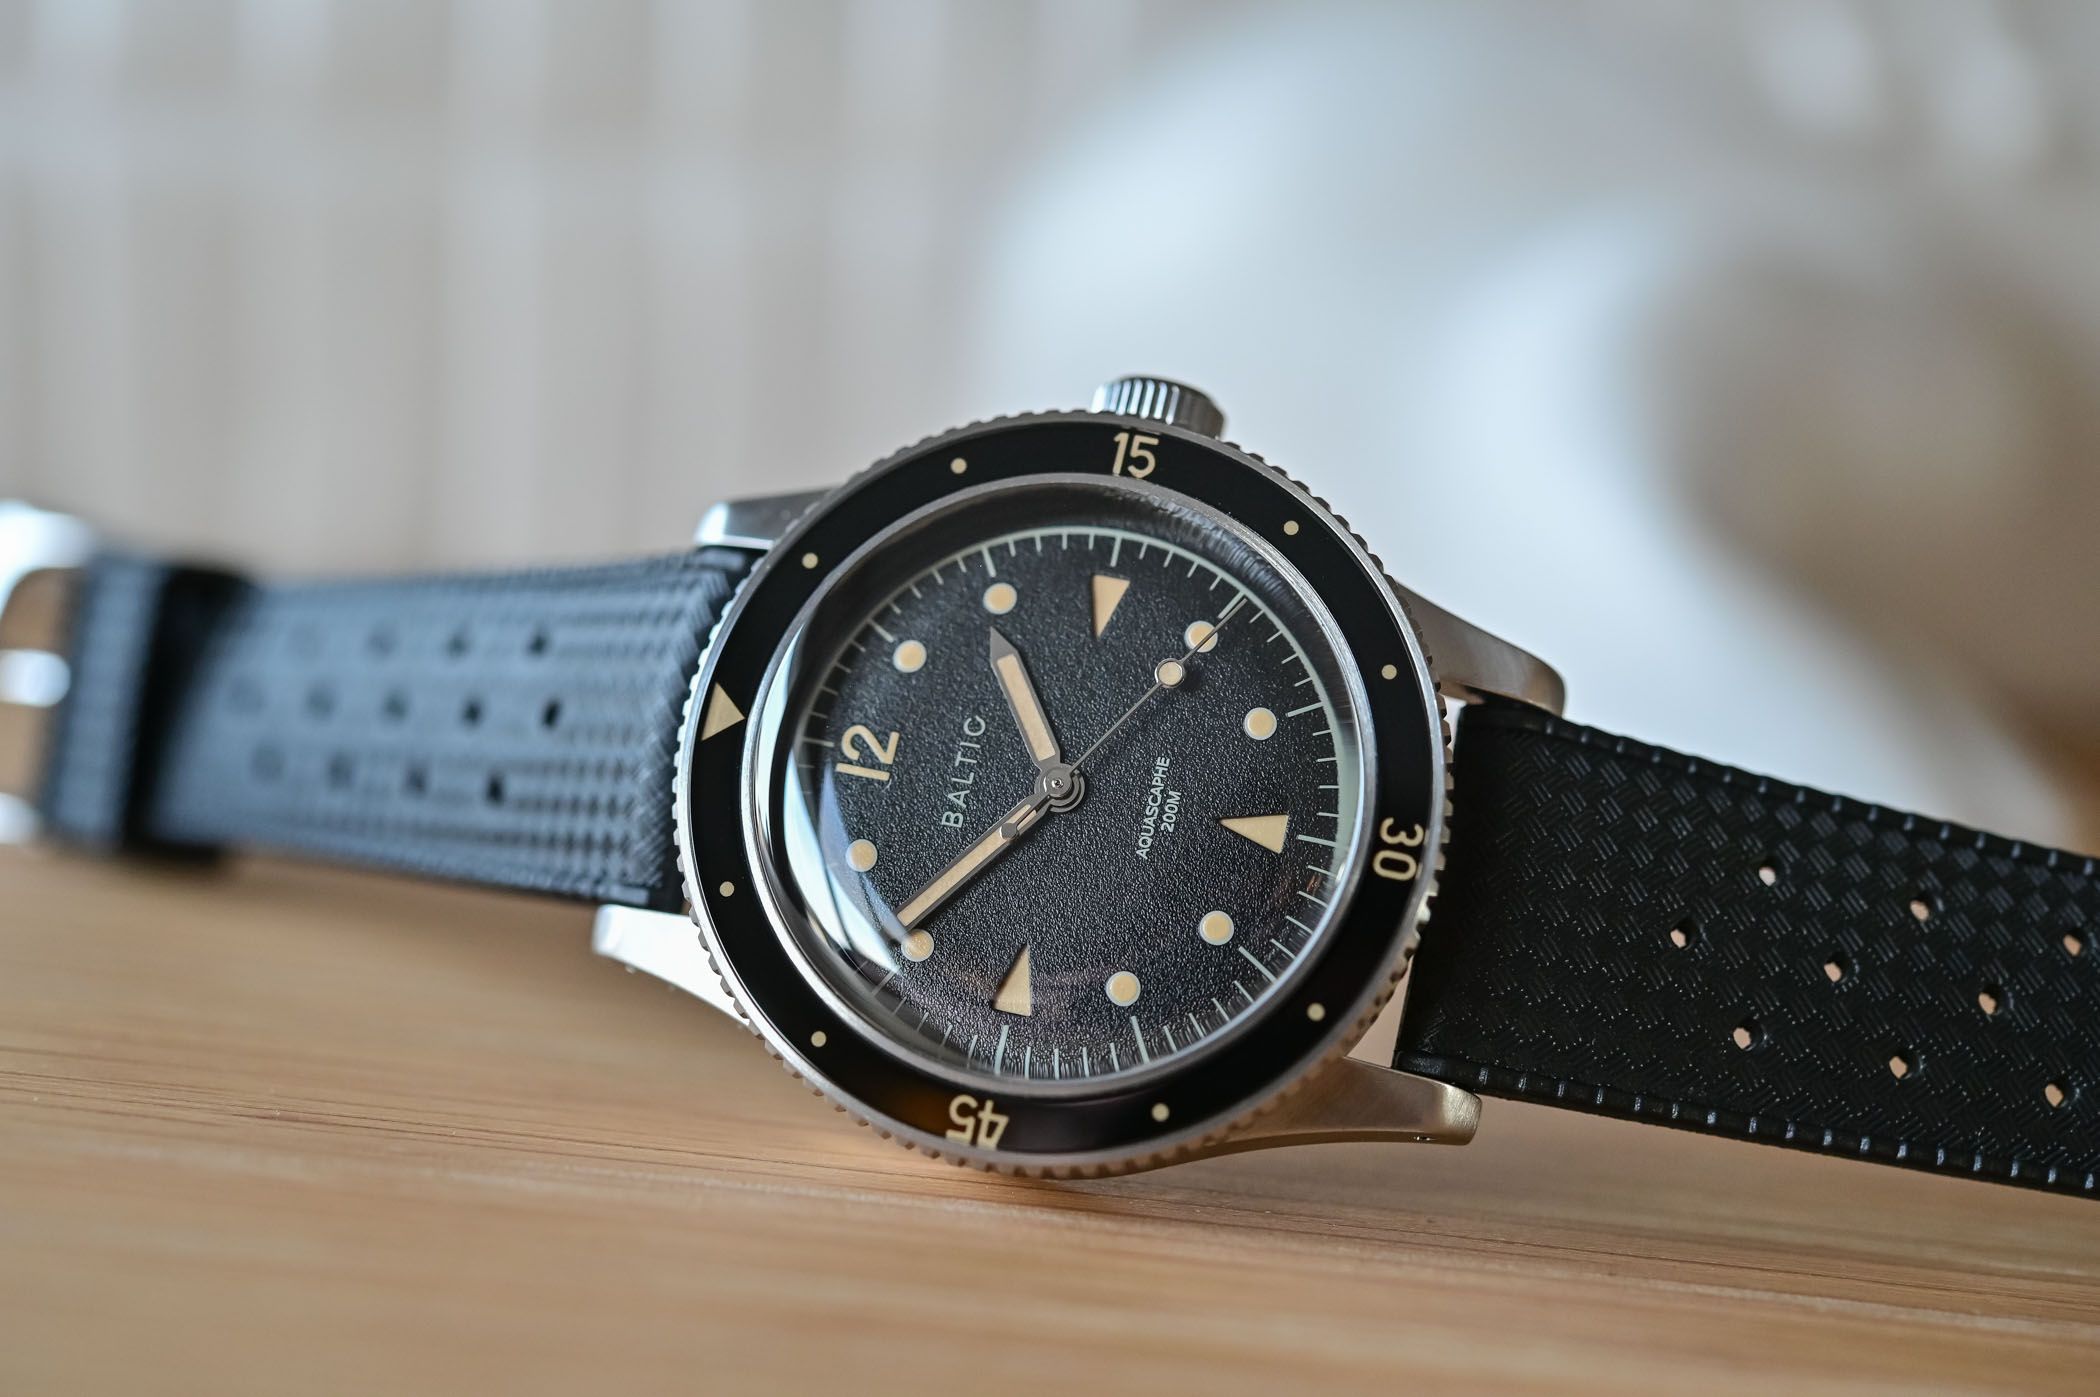 Baltic Aquascaphe Dive Watch - Review